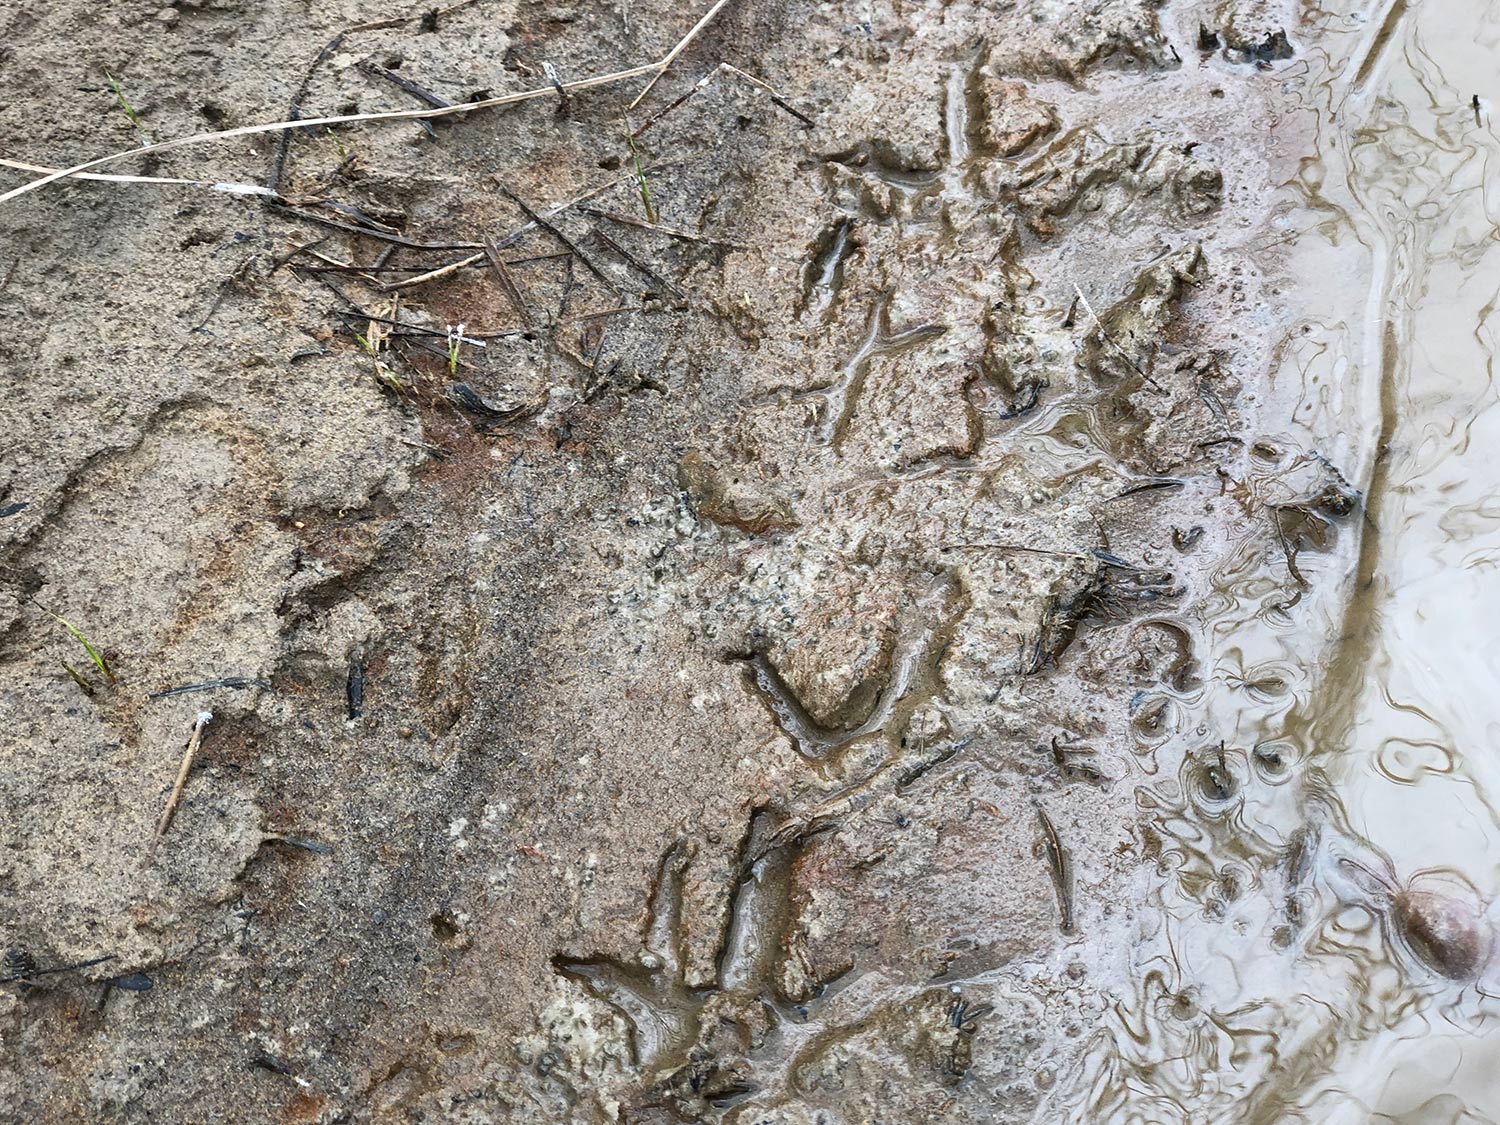 Turkey tracks in the mud.